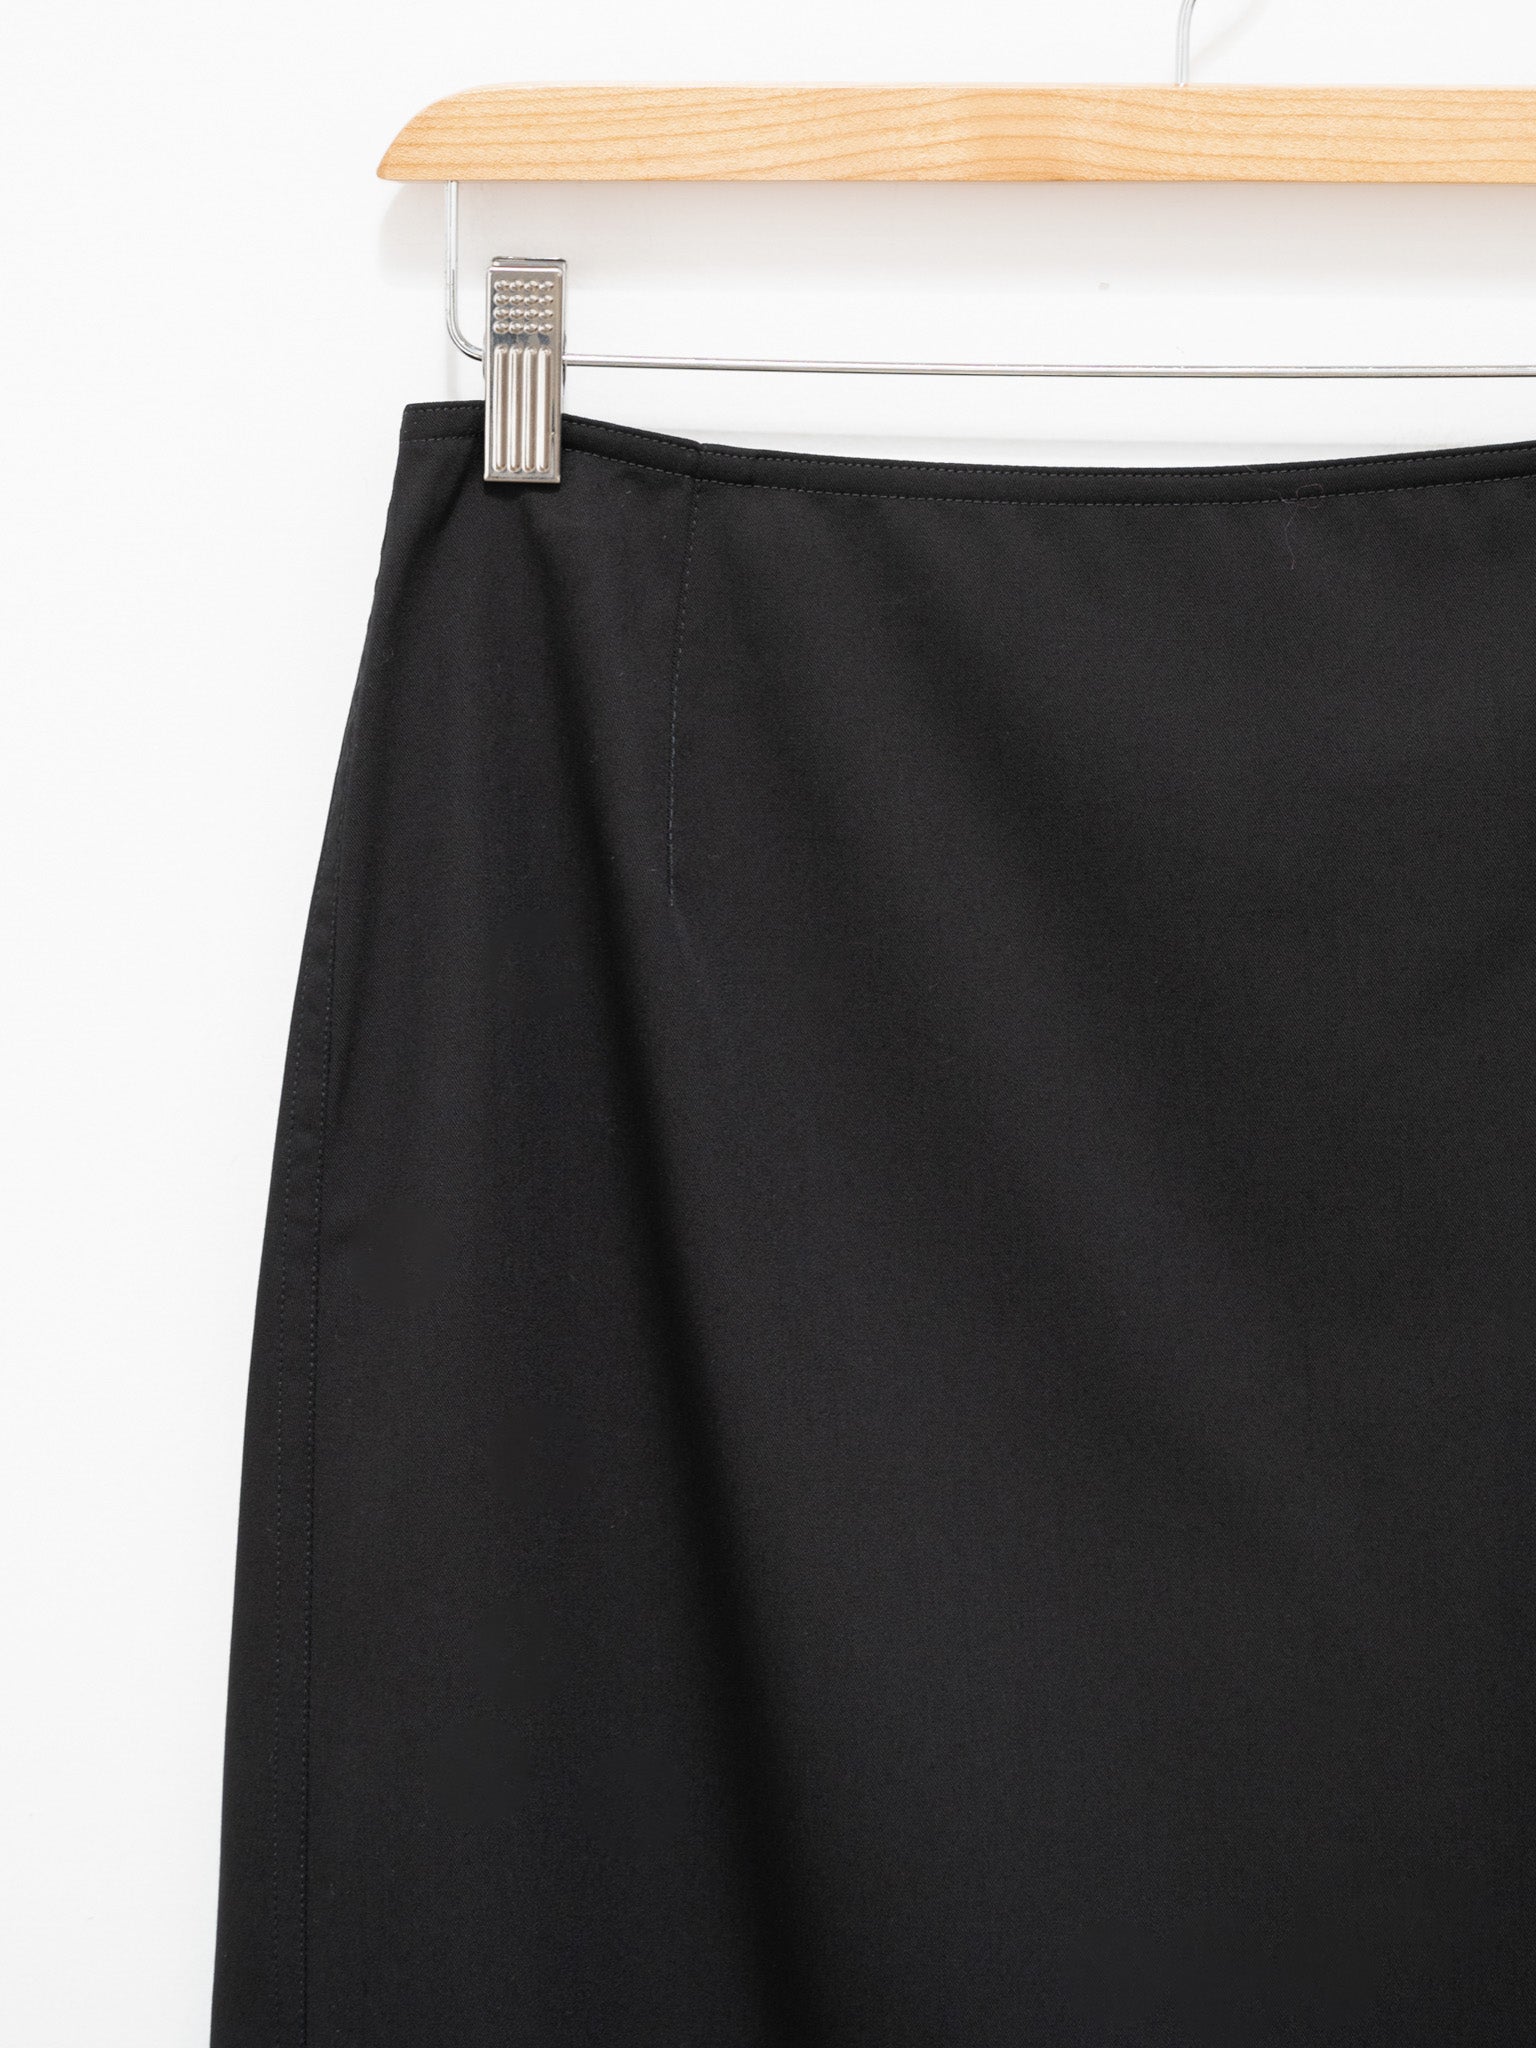 Namu Shop - Sofie D'Hoore Secret Skirt - Black